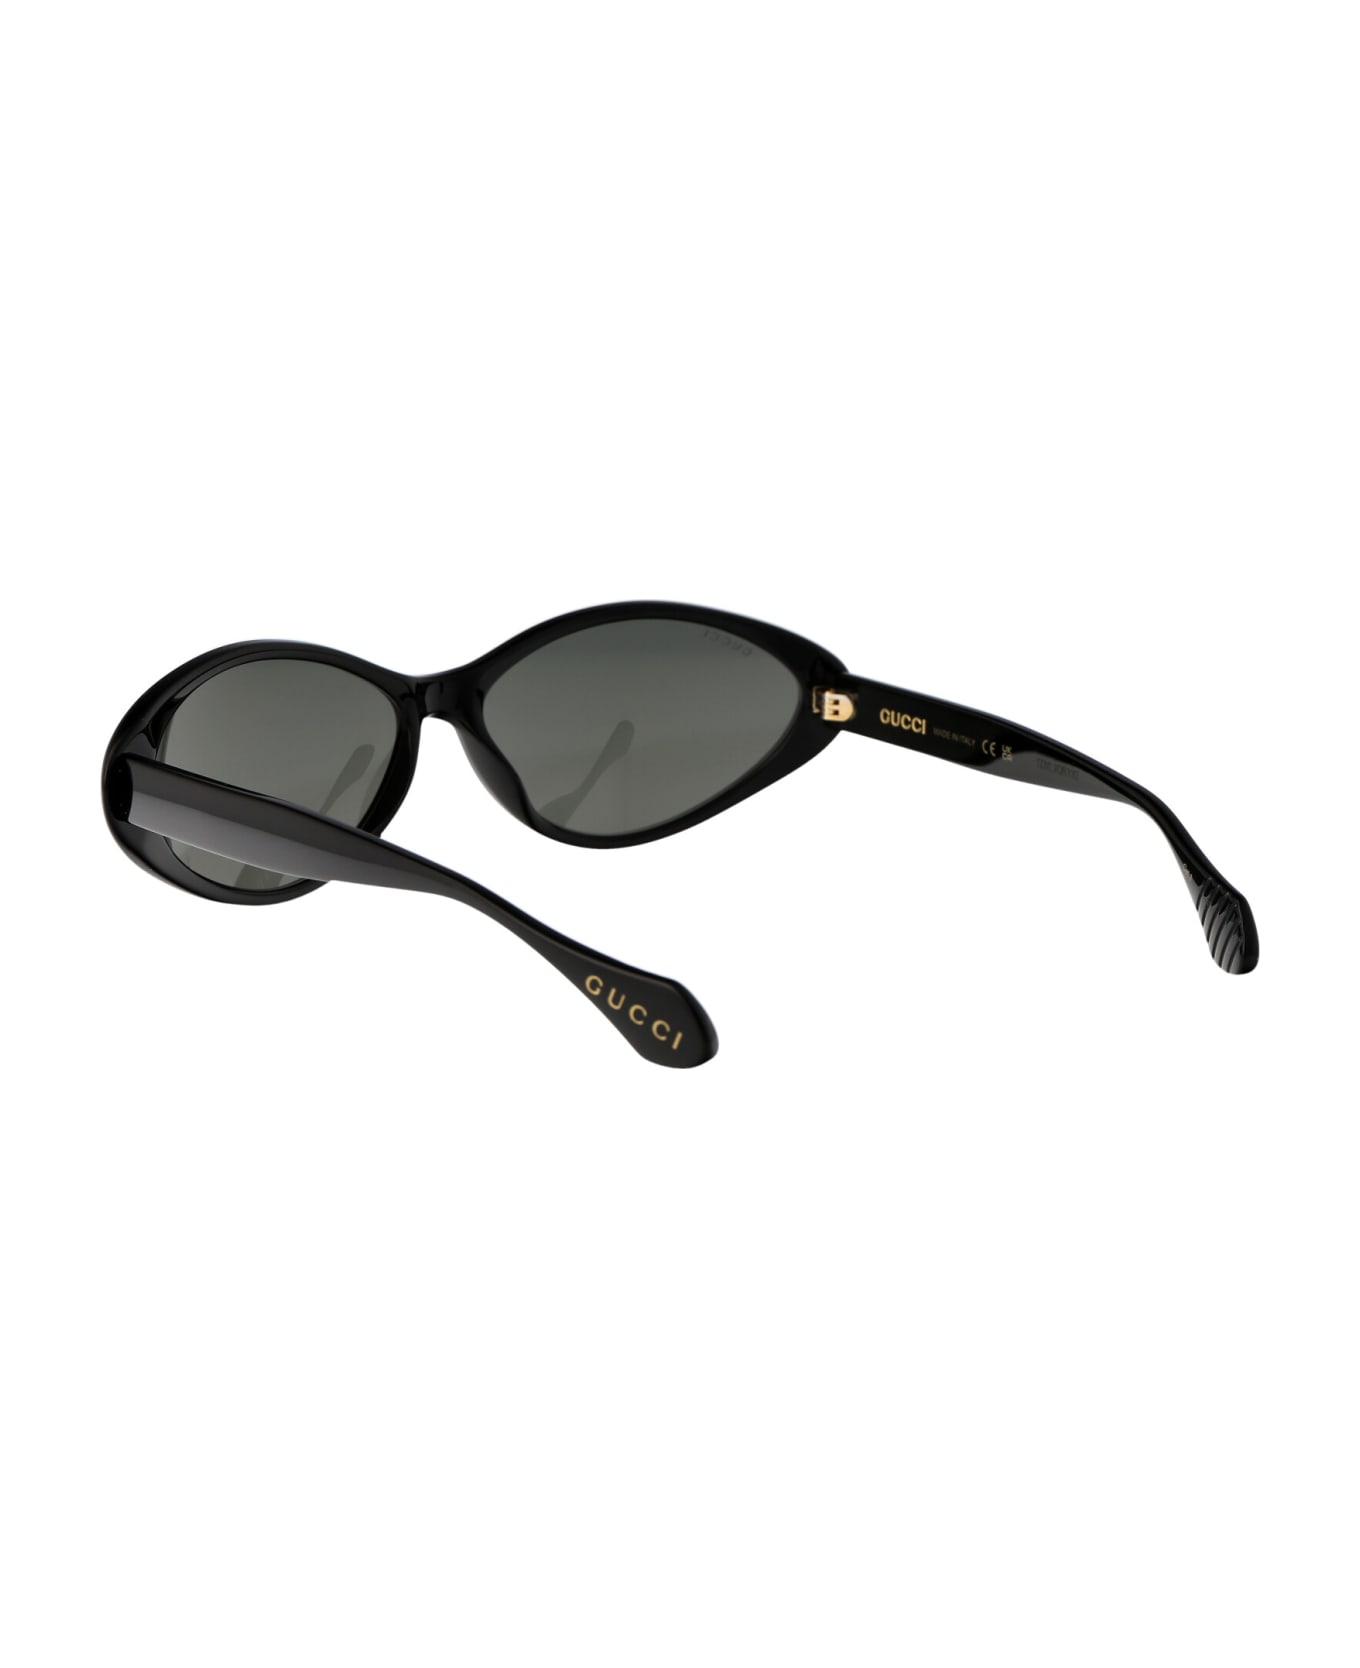 Gucci Eyewear Gg1377s Sunglasses - 002 BLACK BLACK GREY